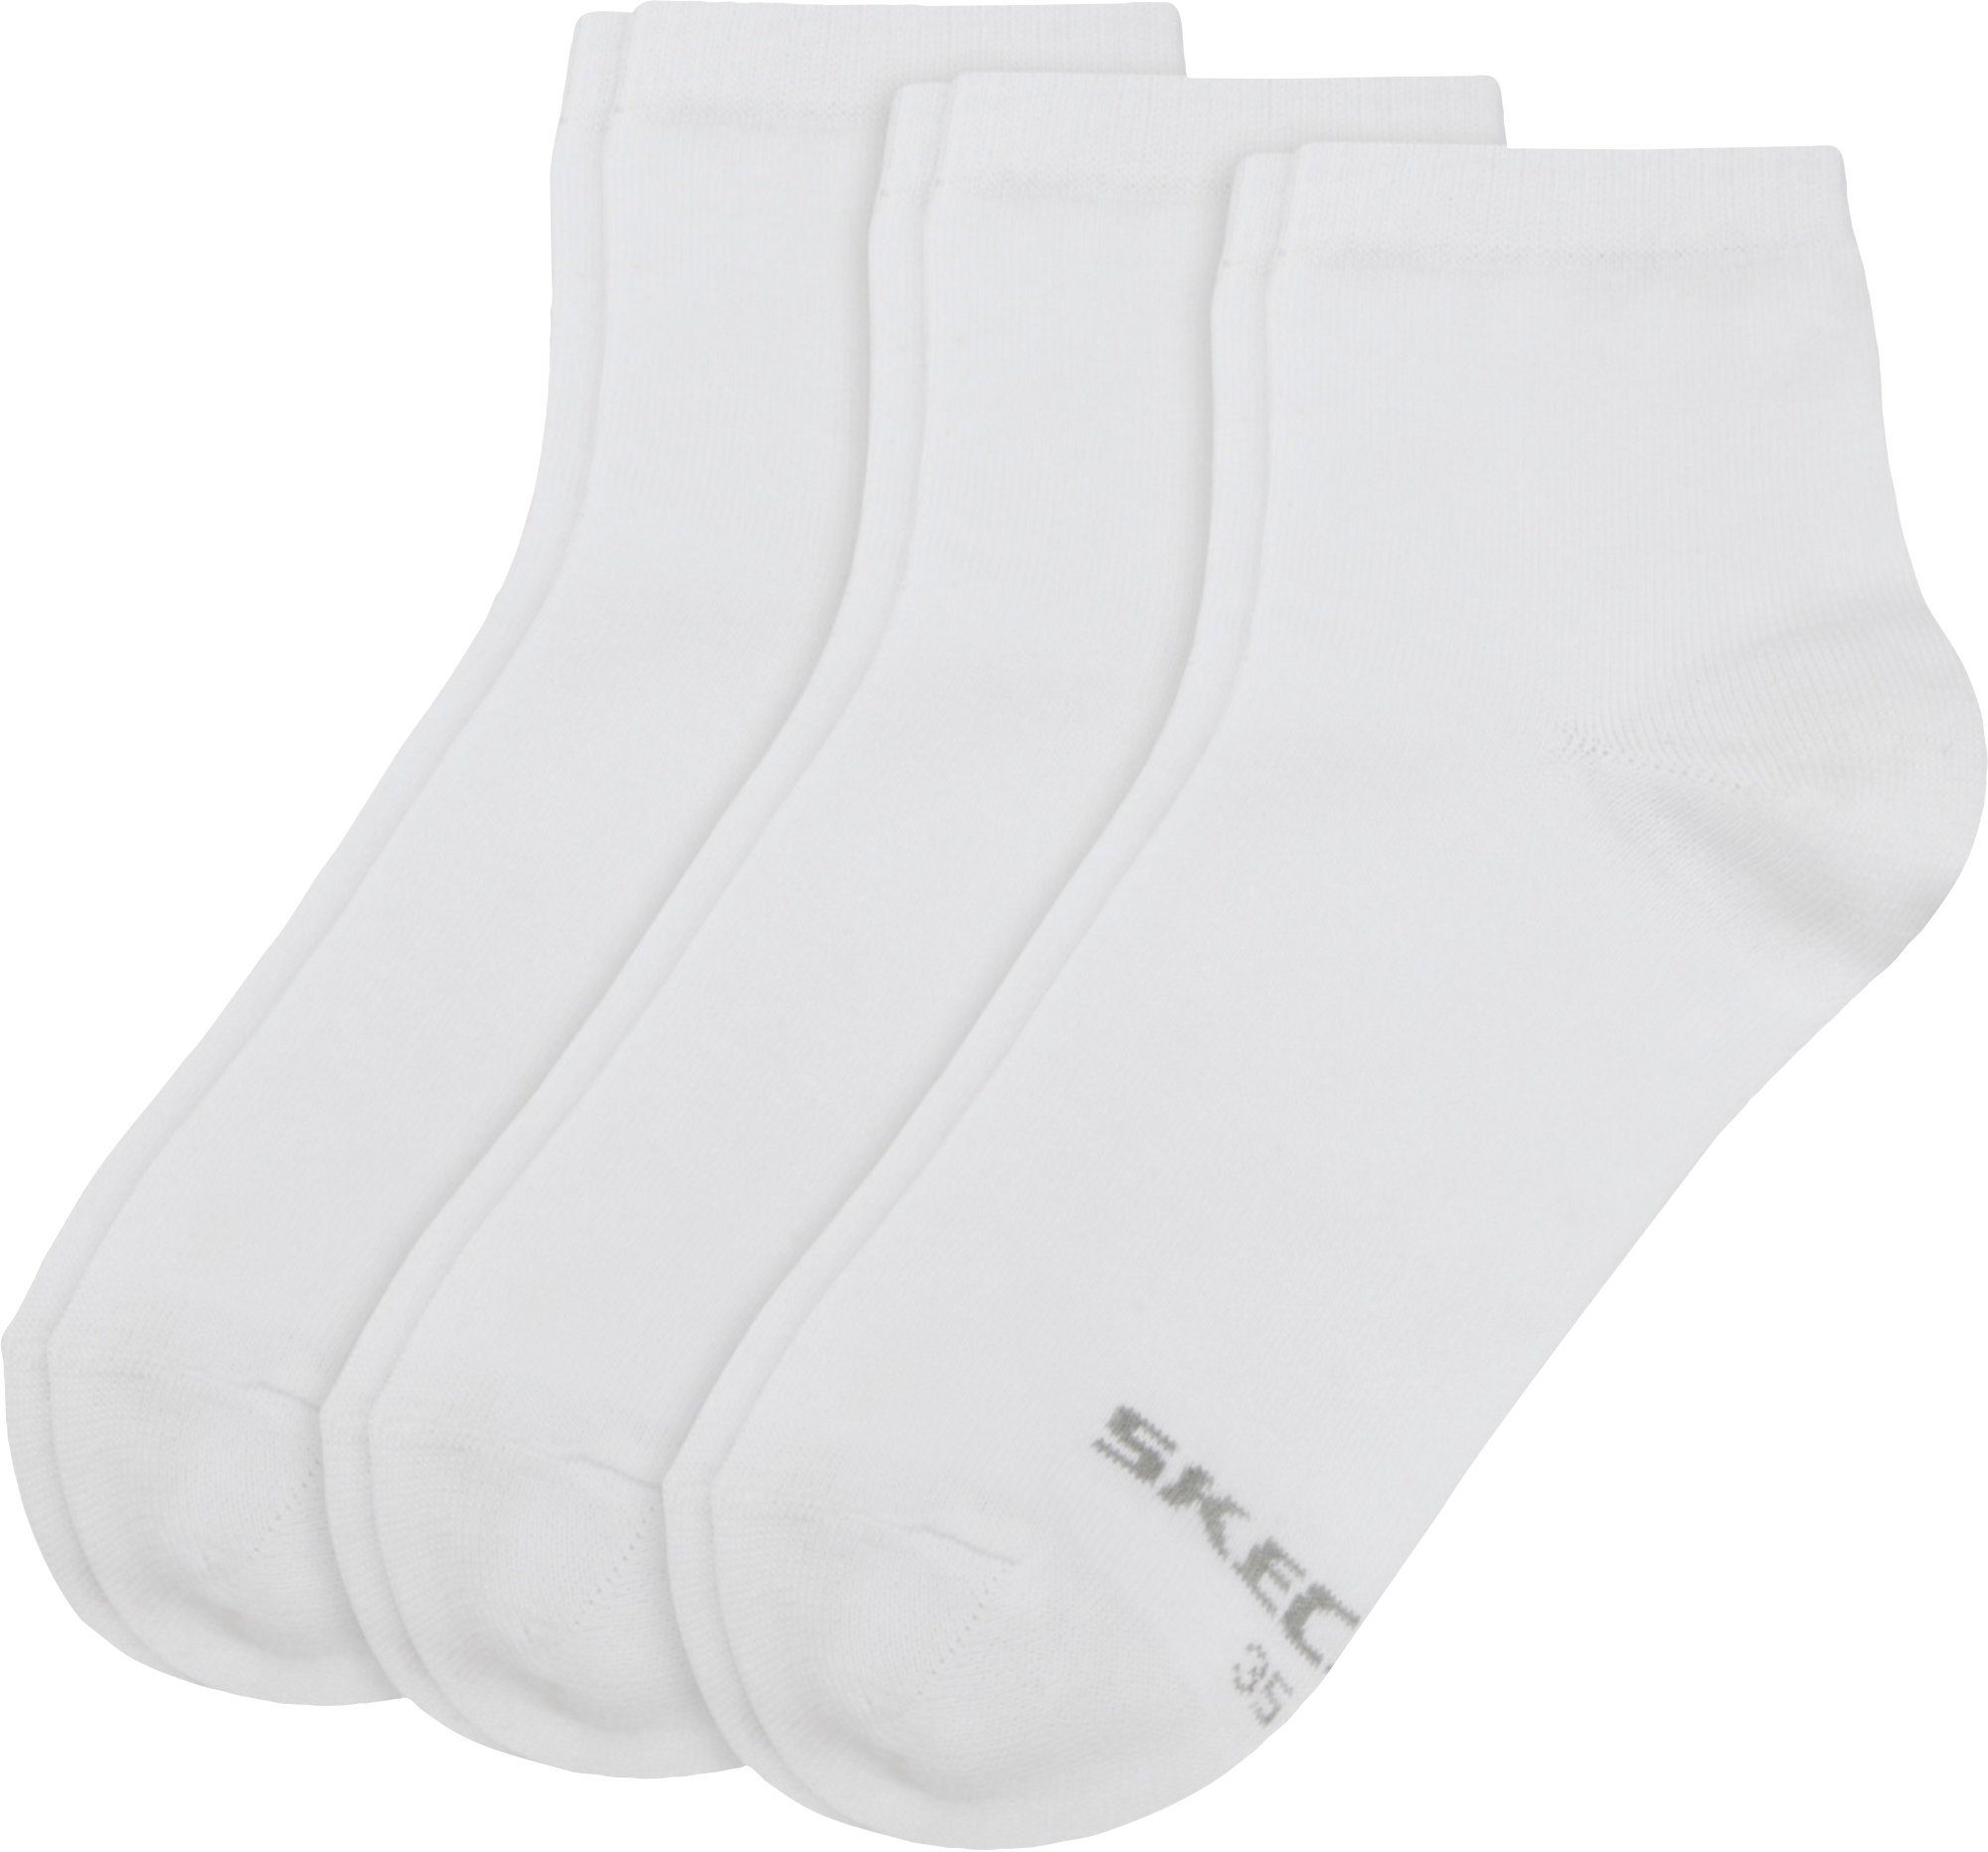 Skechers Socken Damen-Kurzsocken 3 Paar Uni weiß